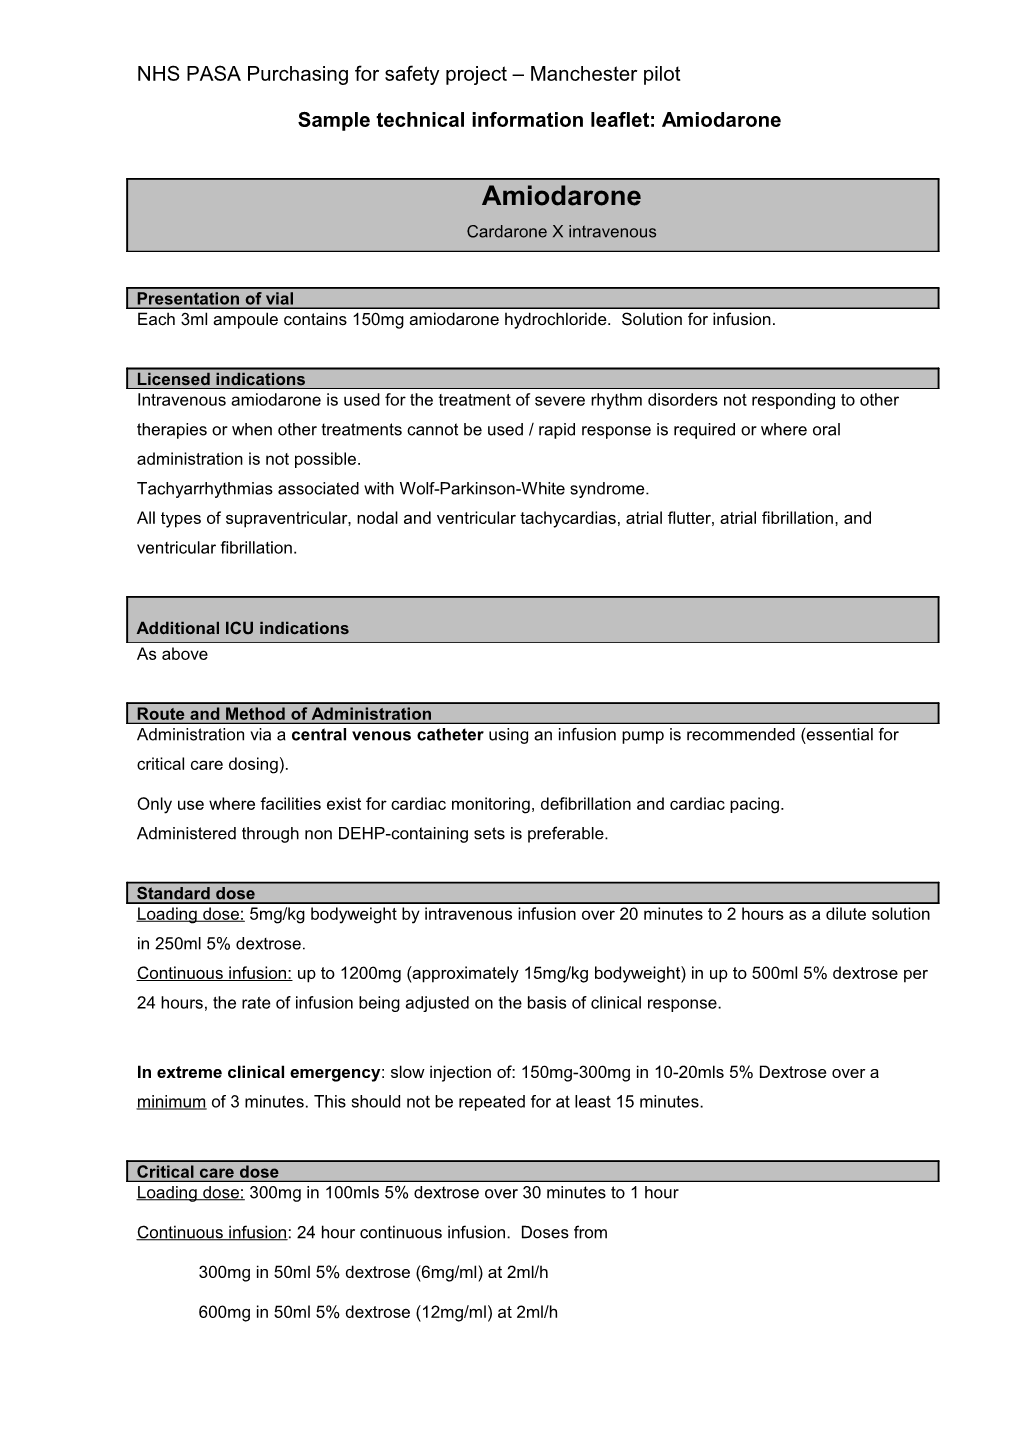 Sample Technical Information Leaflet: Amiodarone